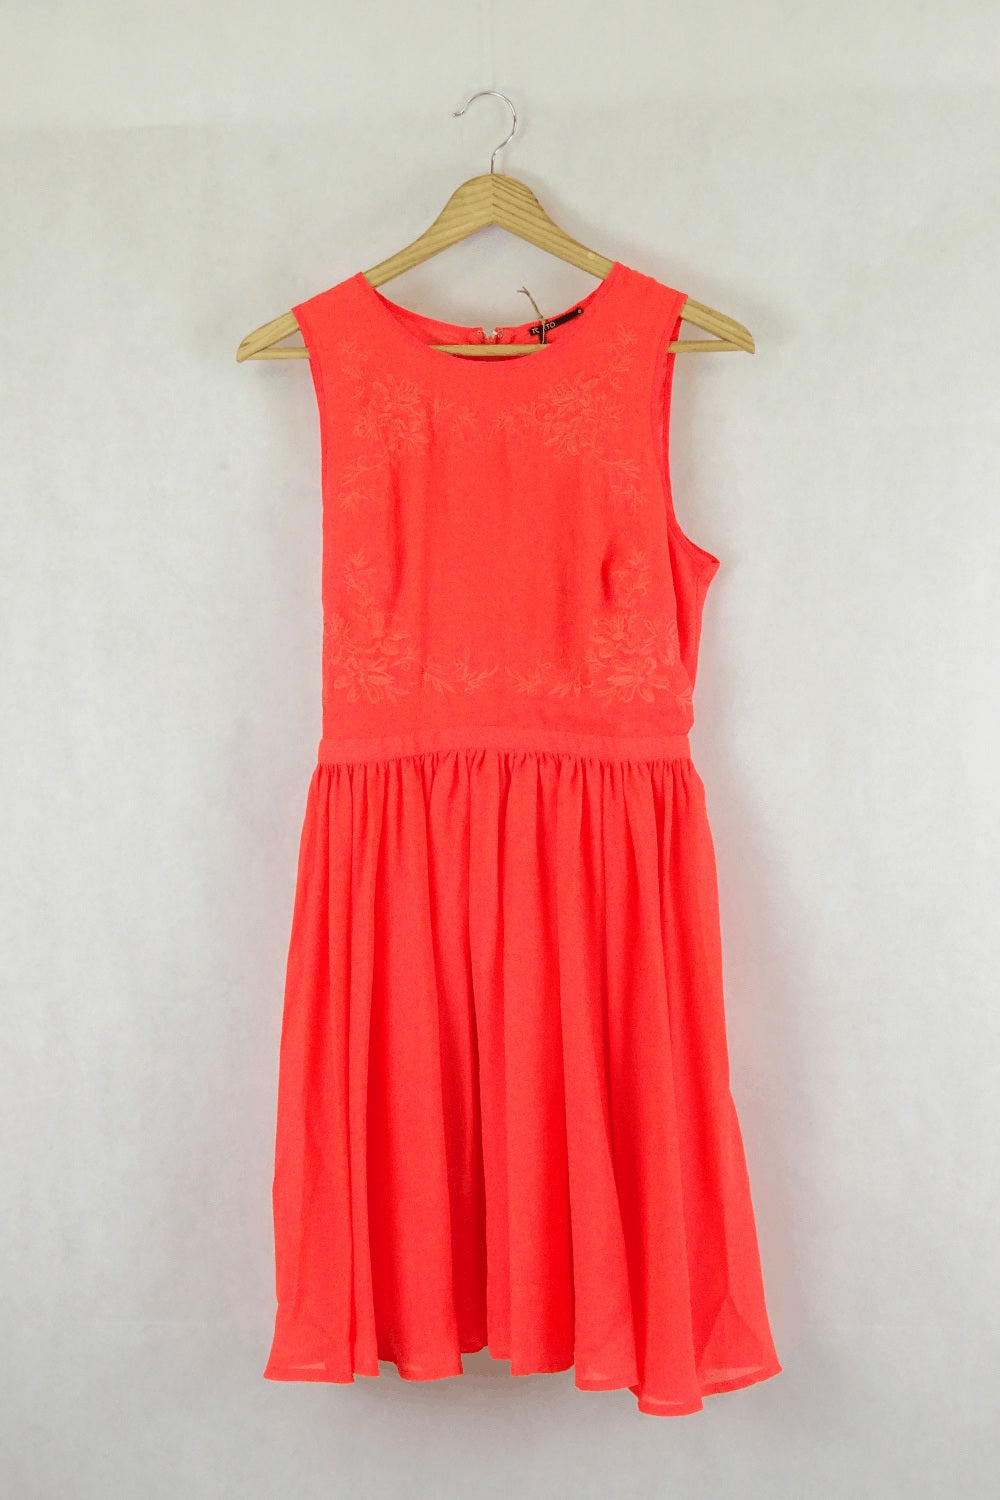 Tokito Fit And Flare Orange Embroidered Sleeveless Dress 8